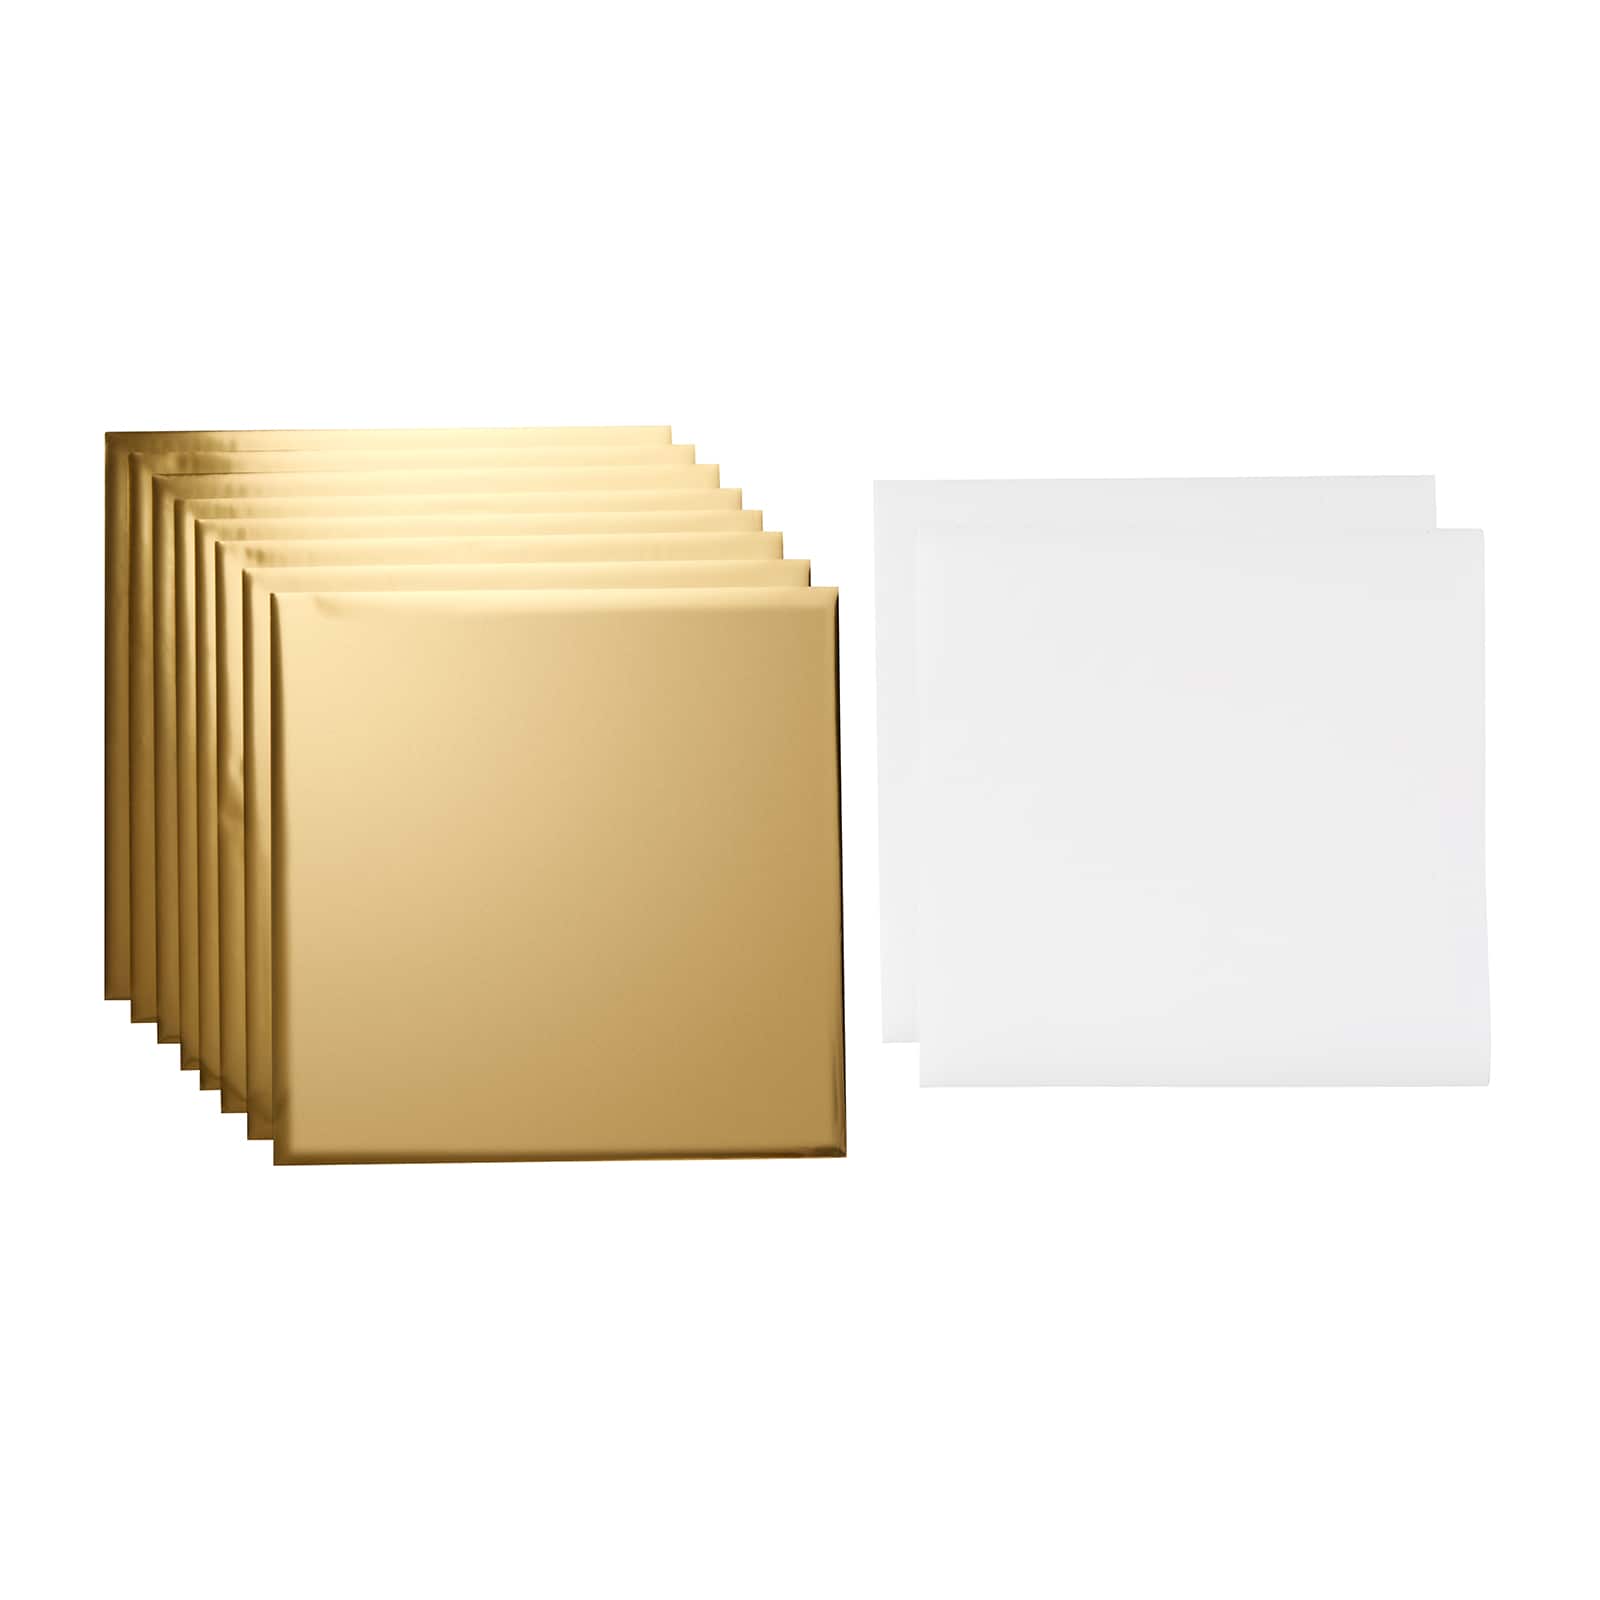 Cricut&#xAE; Foil Transfer Sheets, Gold